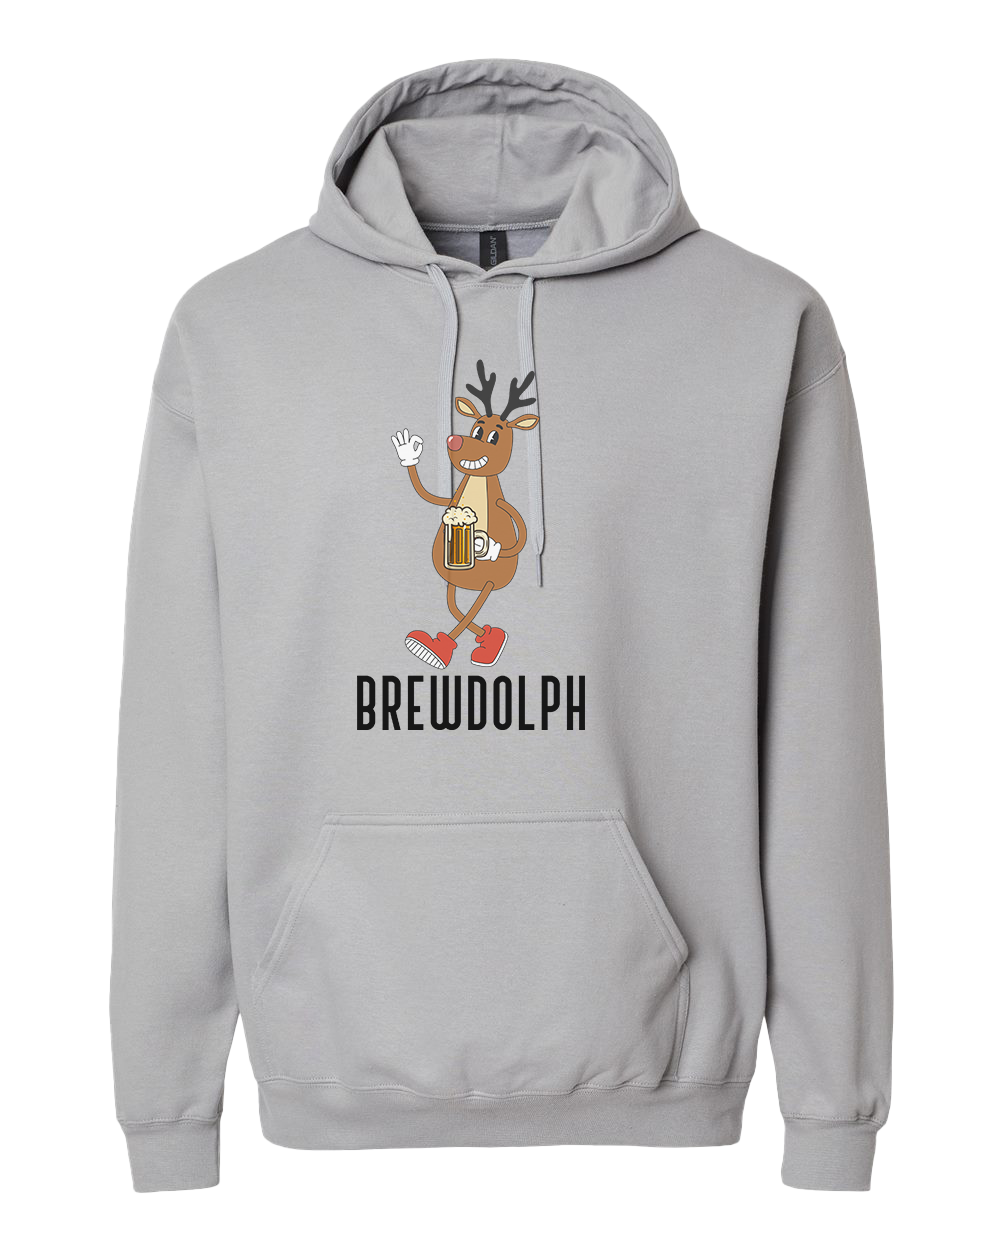 Brewdolph Hooded Sweatshirt - Athletic Heather